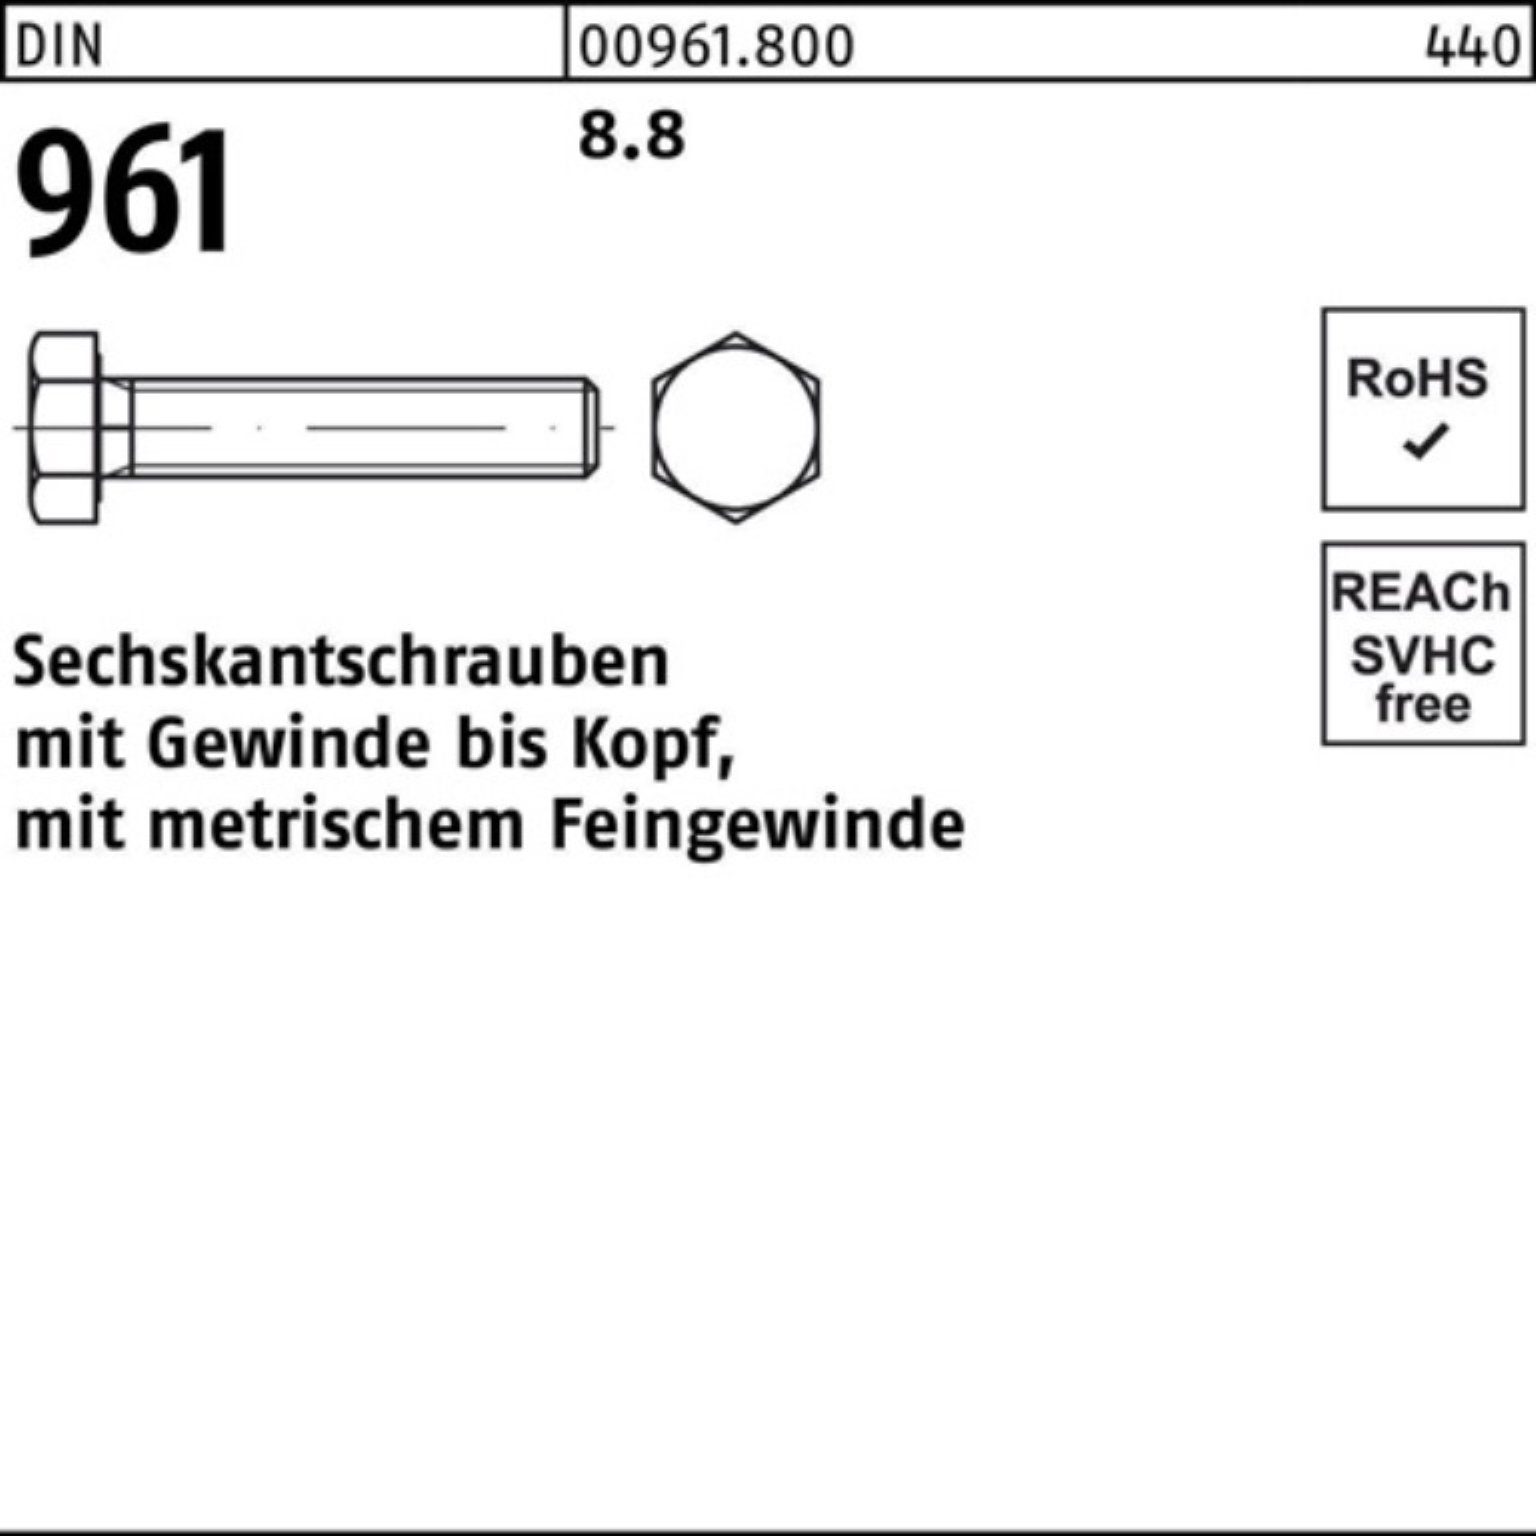 Reyher Sechskantschraube 200er Pack Sechskantschraube 961 200 M10x1,25x DIN 8.8 Stück 16 DI VG